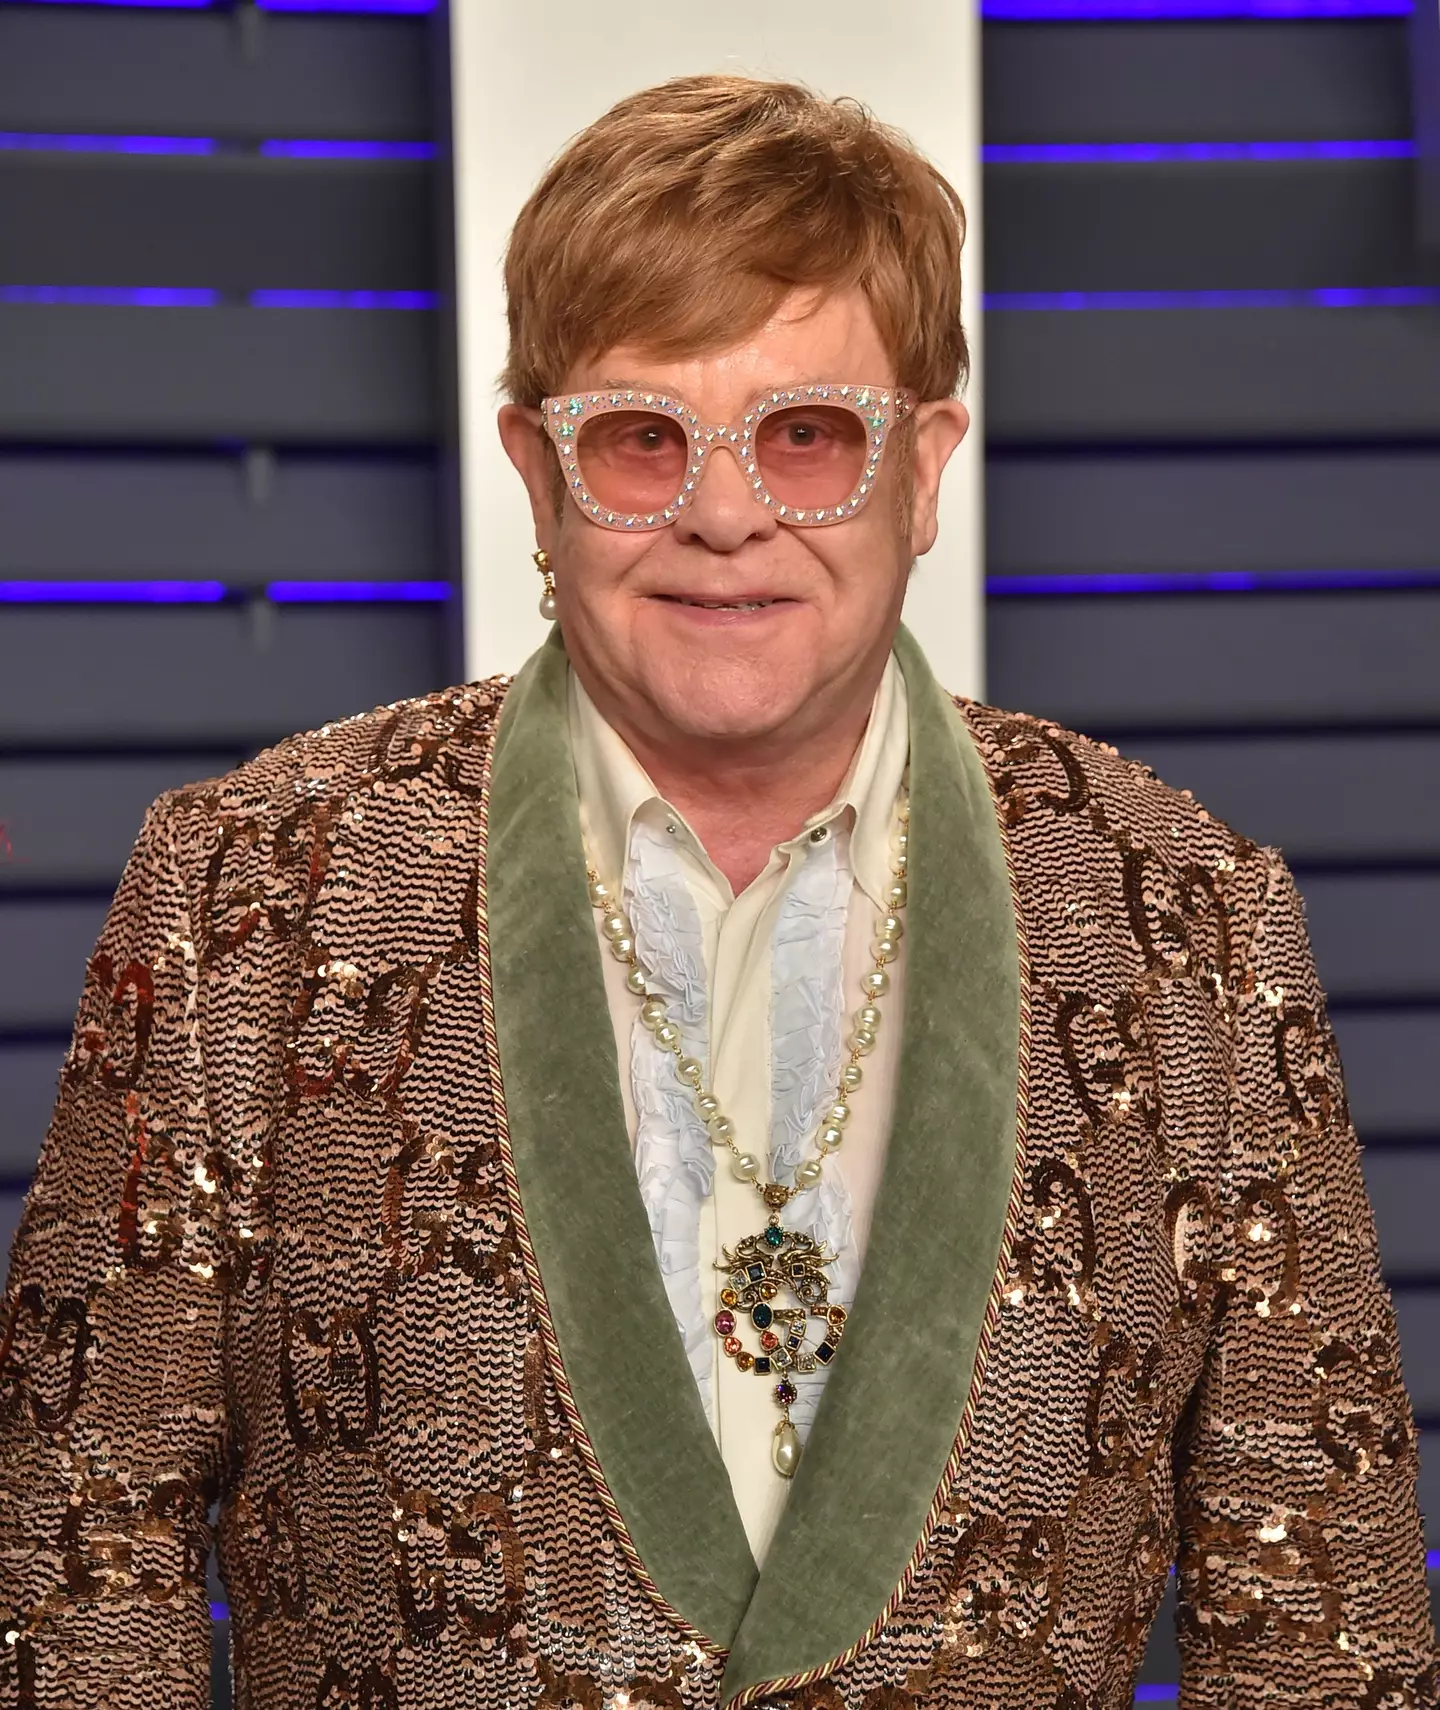 Elton John didn't hold back about Michael Jackson in his memoir, 'Me'.